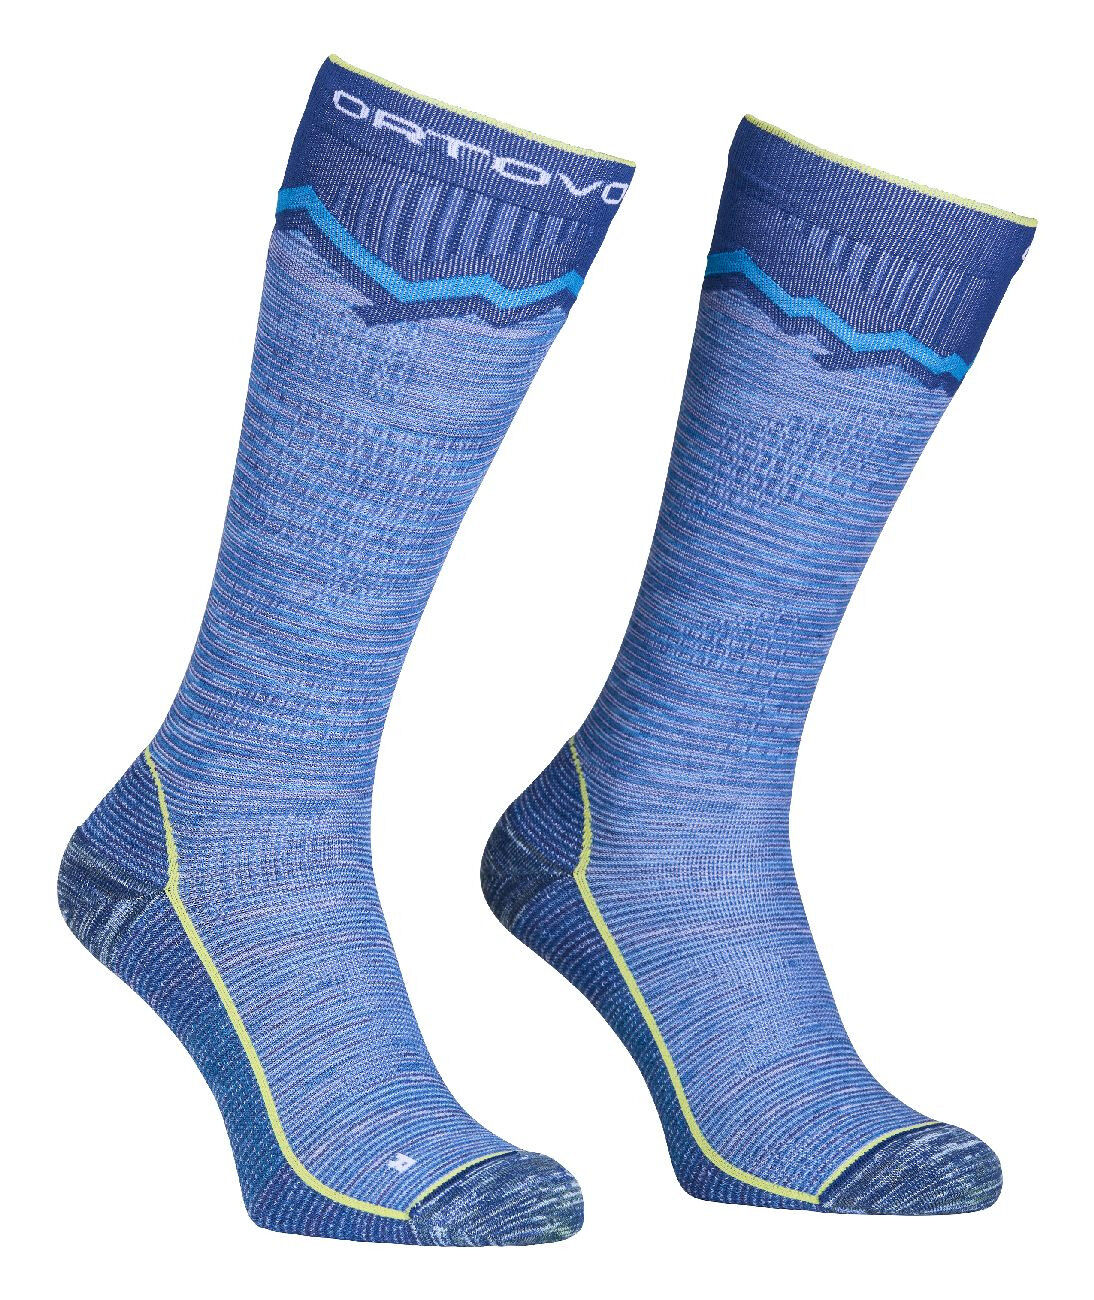 Ortovox Tour Long Socks - Ski socks - Men's